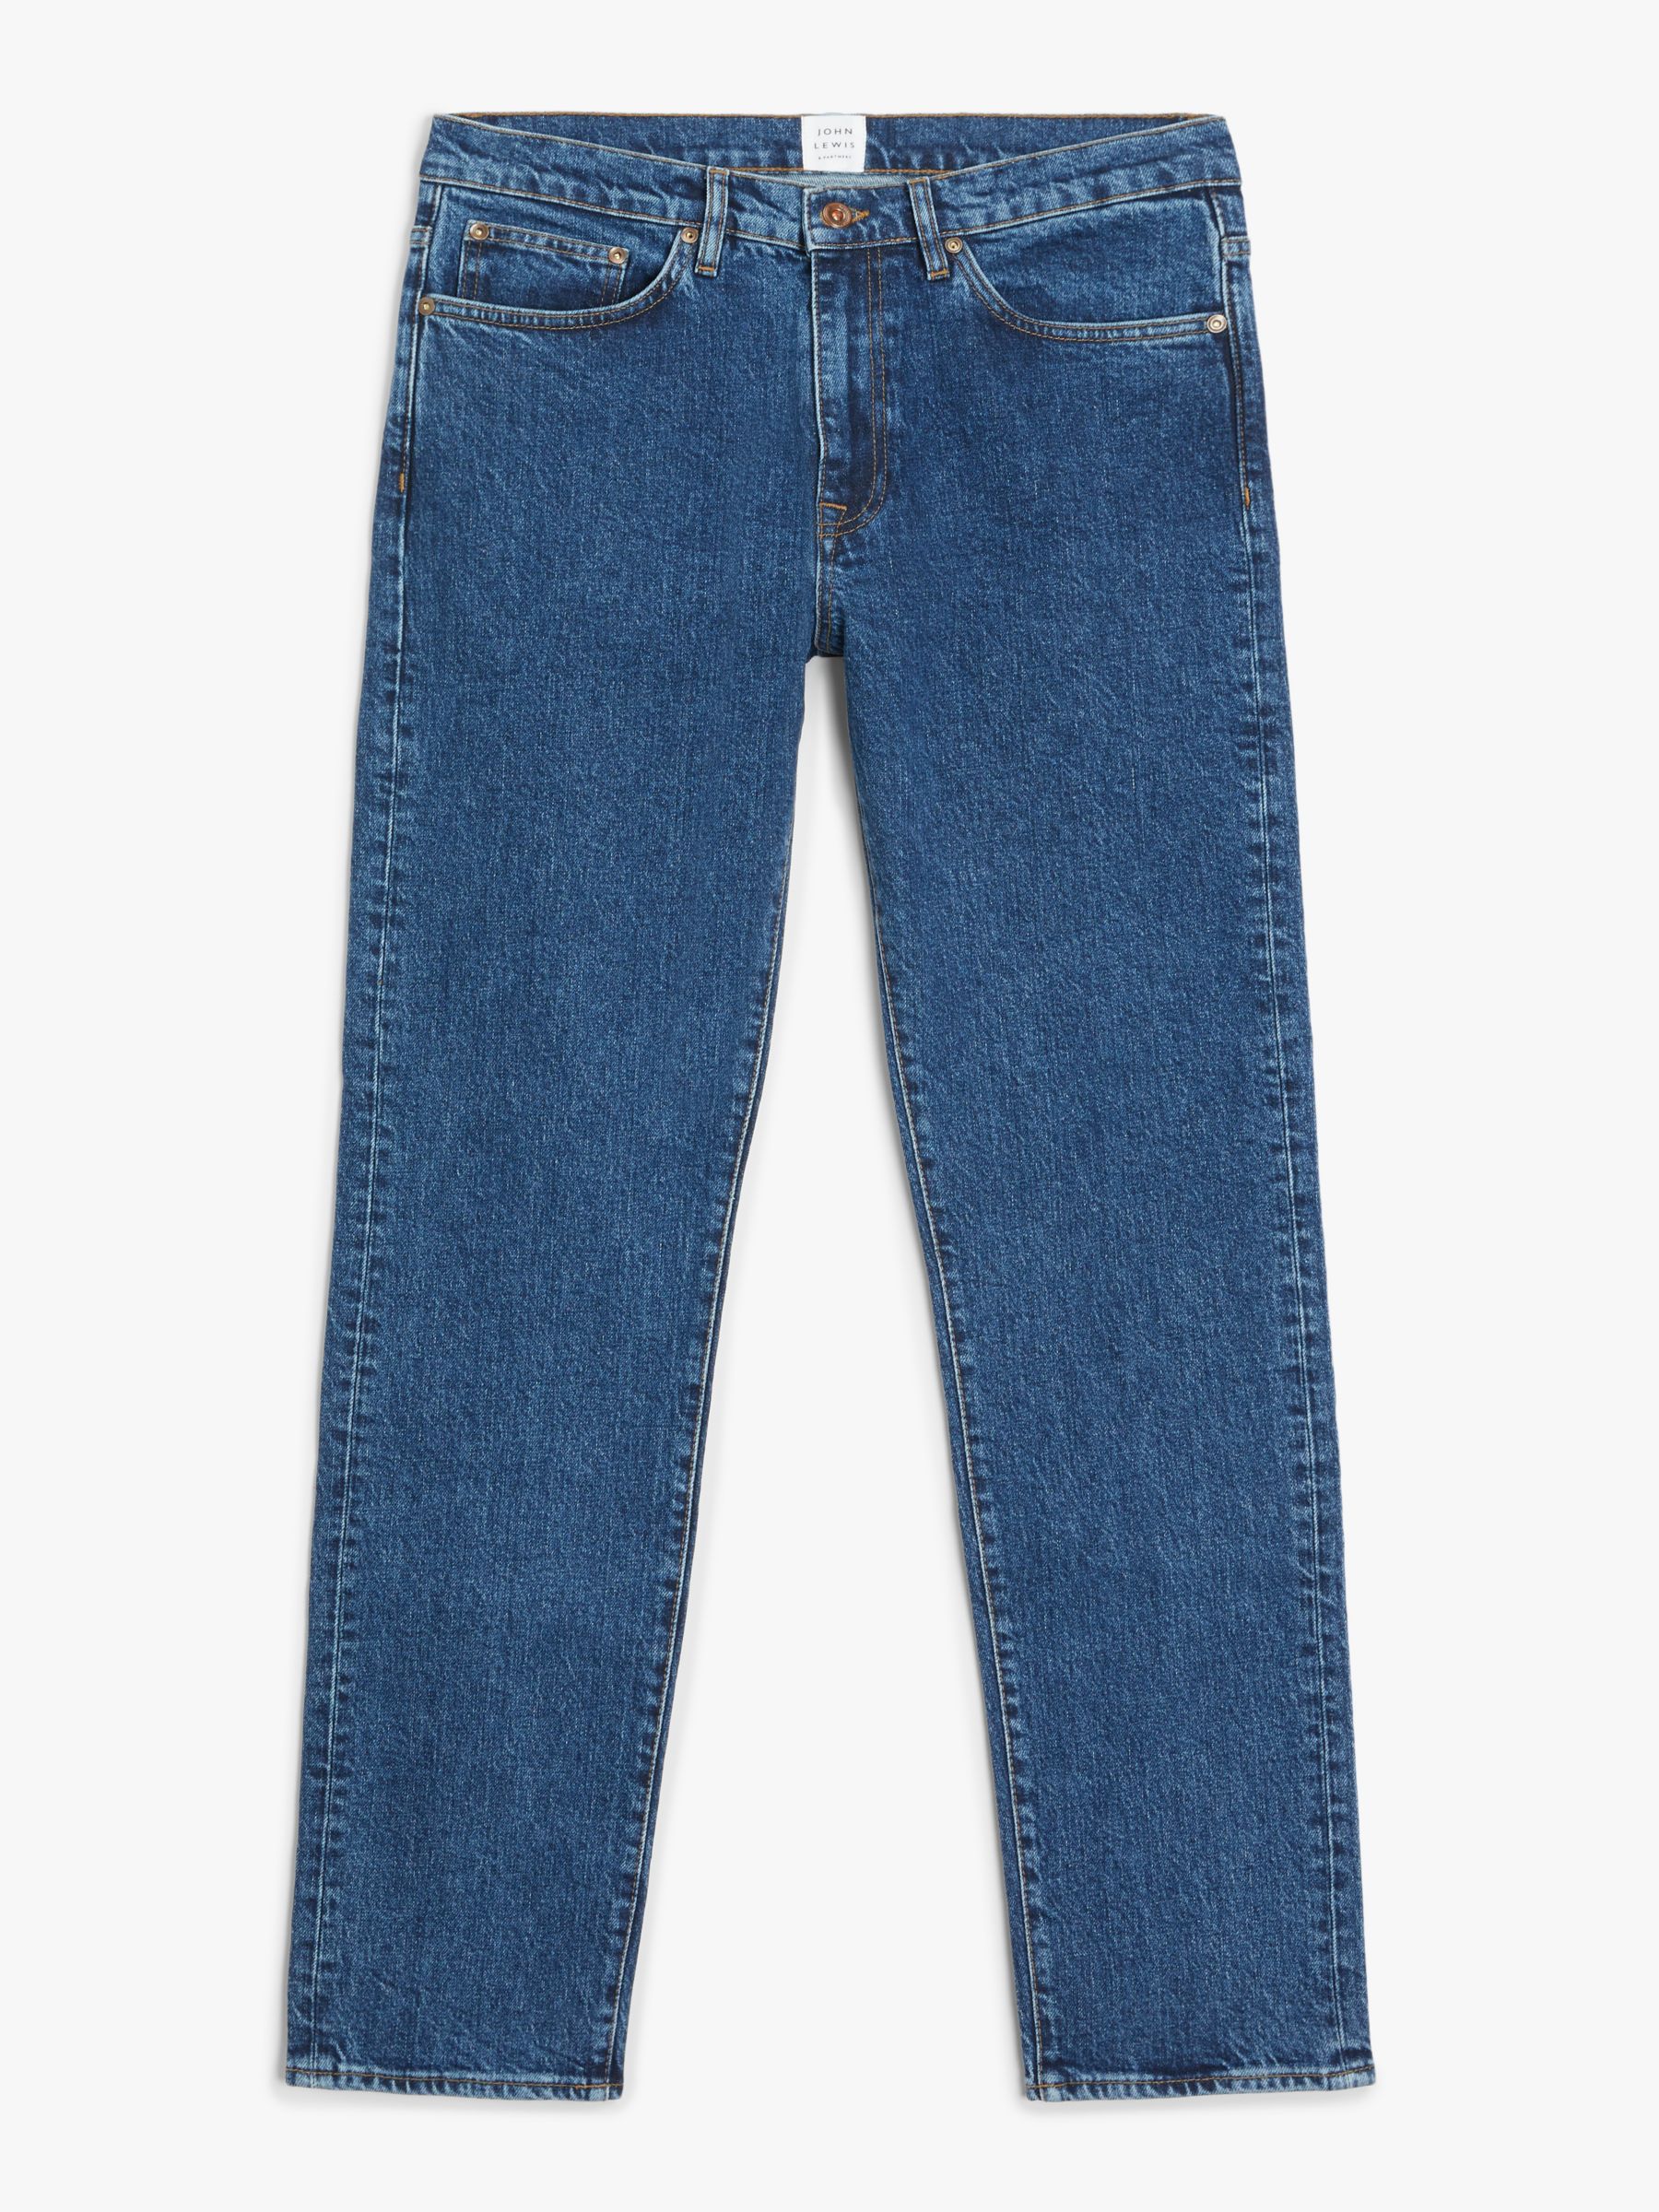 John Lewis & Partners Slim Fit Organic Cotton Jeans